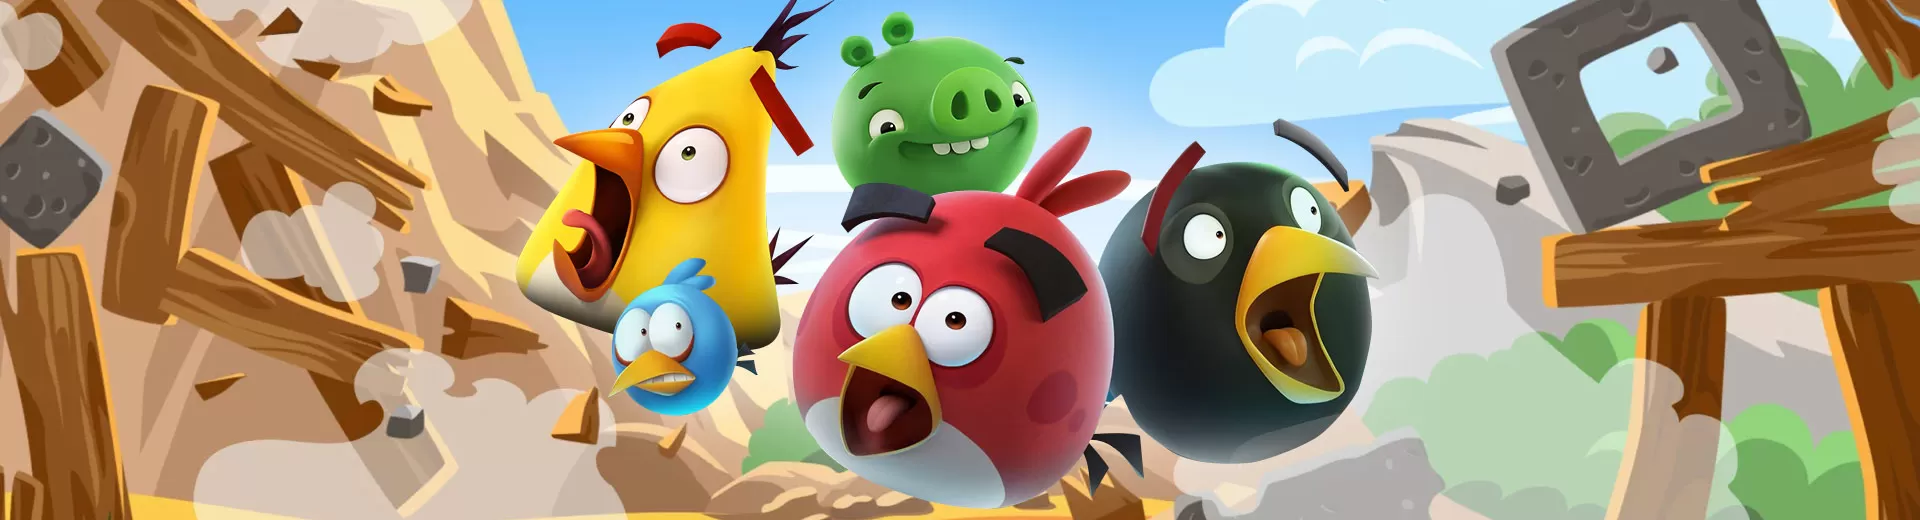 Angry Birds Friends Emulator Pc